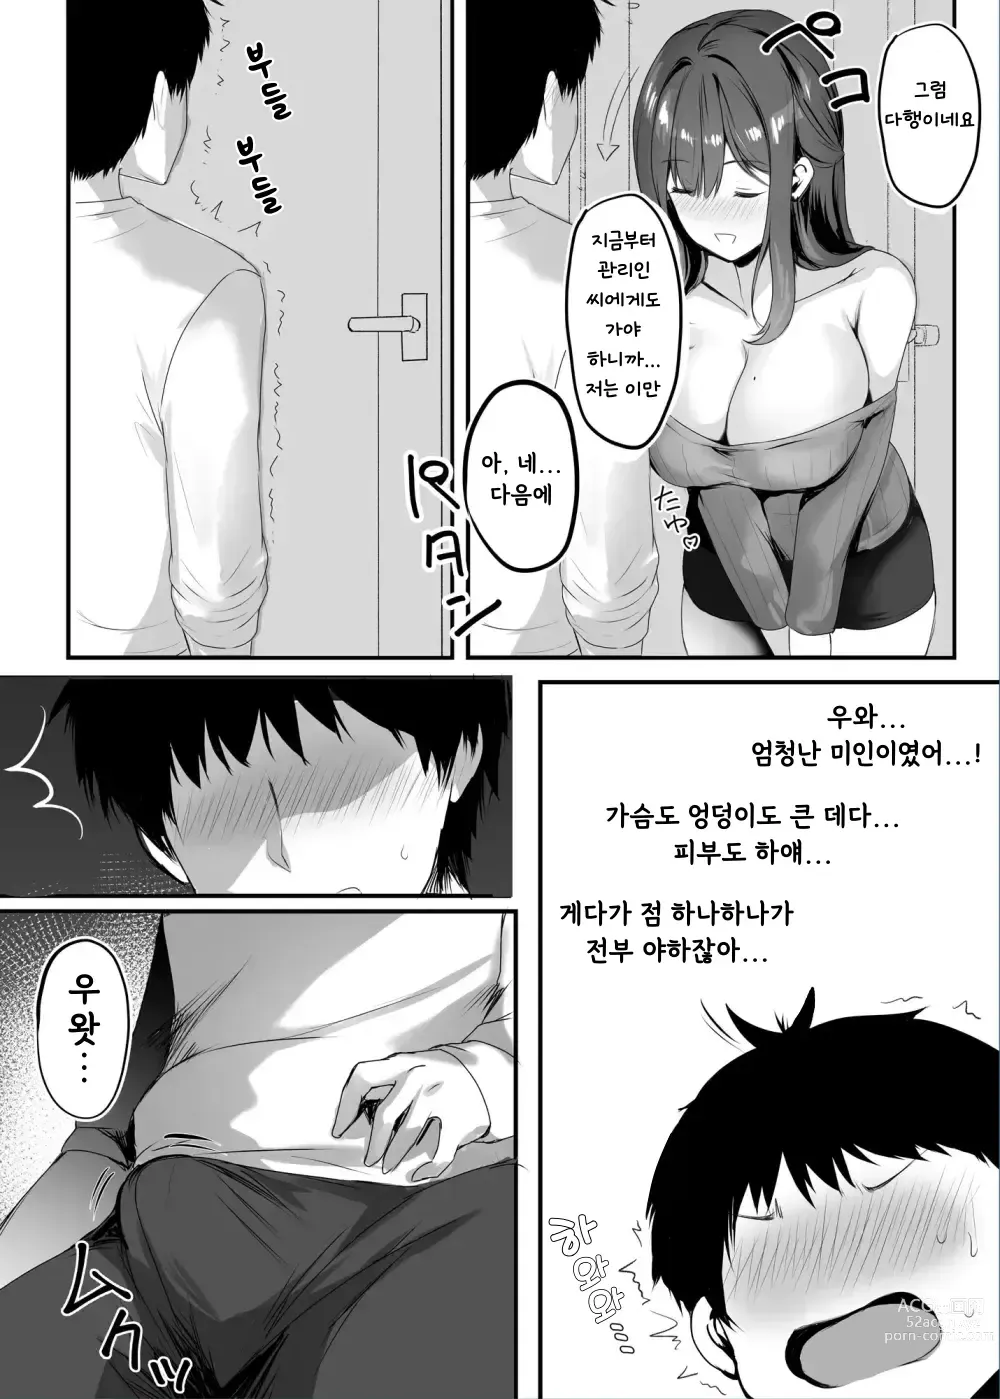 Page 9 of doujinshi 누마루.